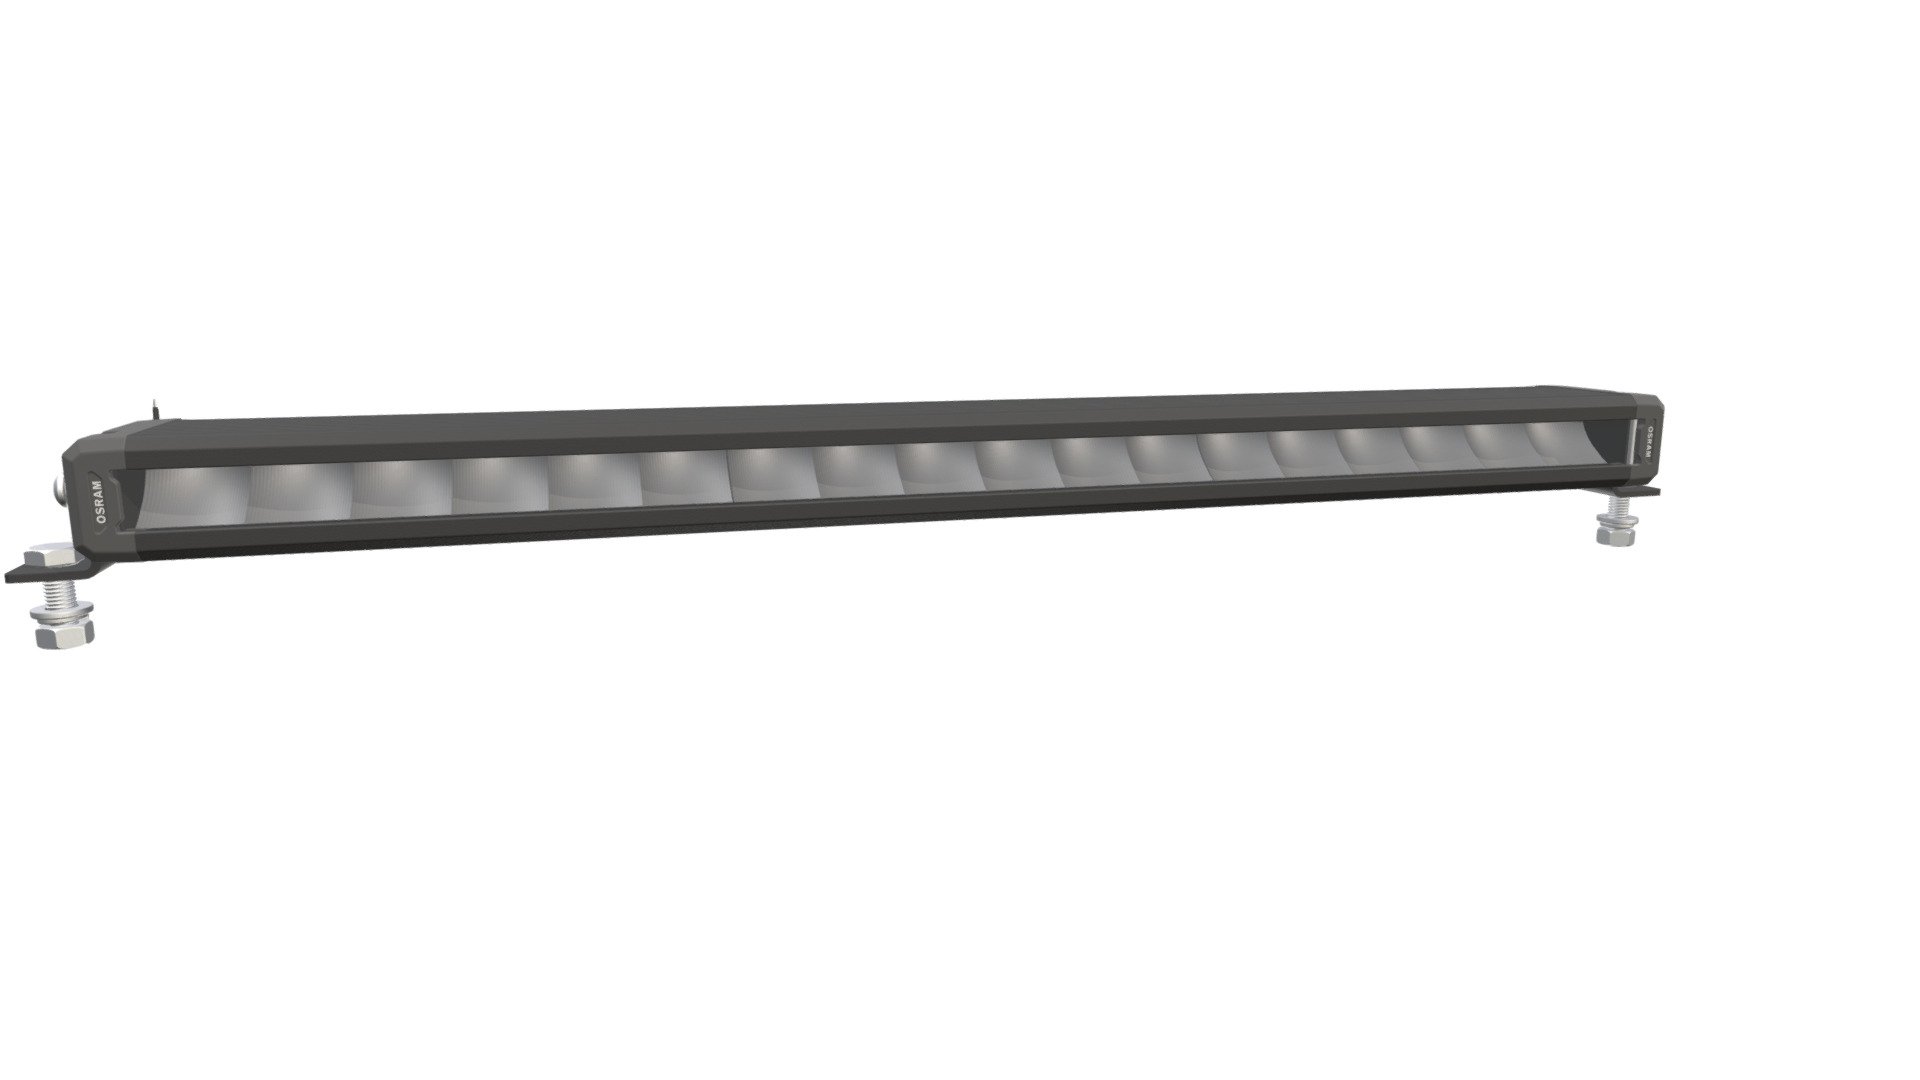 LEDriving_Lightbar_VX500-SP_LEDDL116-SP - 3D model by mds Agenturgruppe GmbH (@mdsAgenturgruppe) 3d model